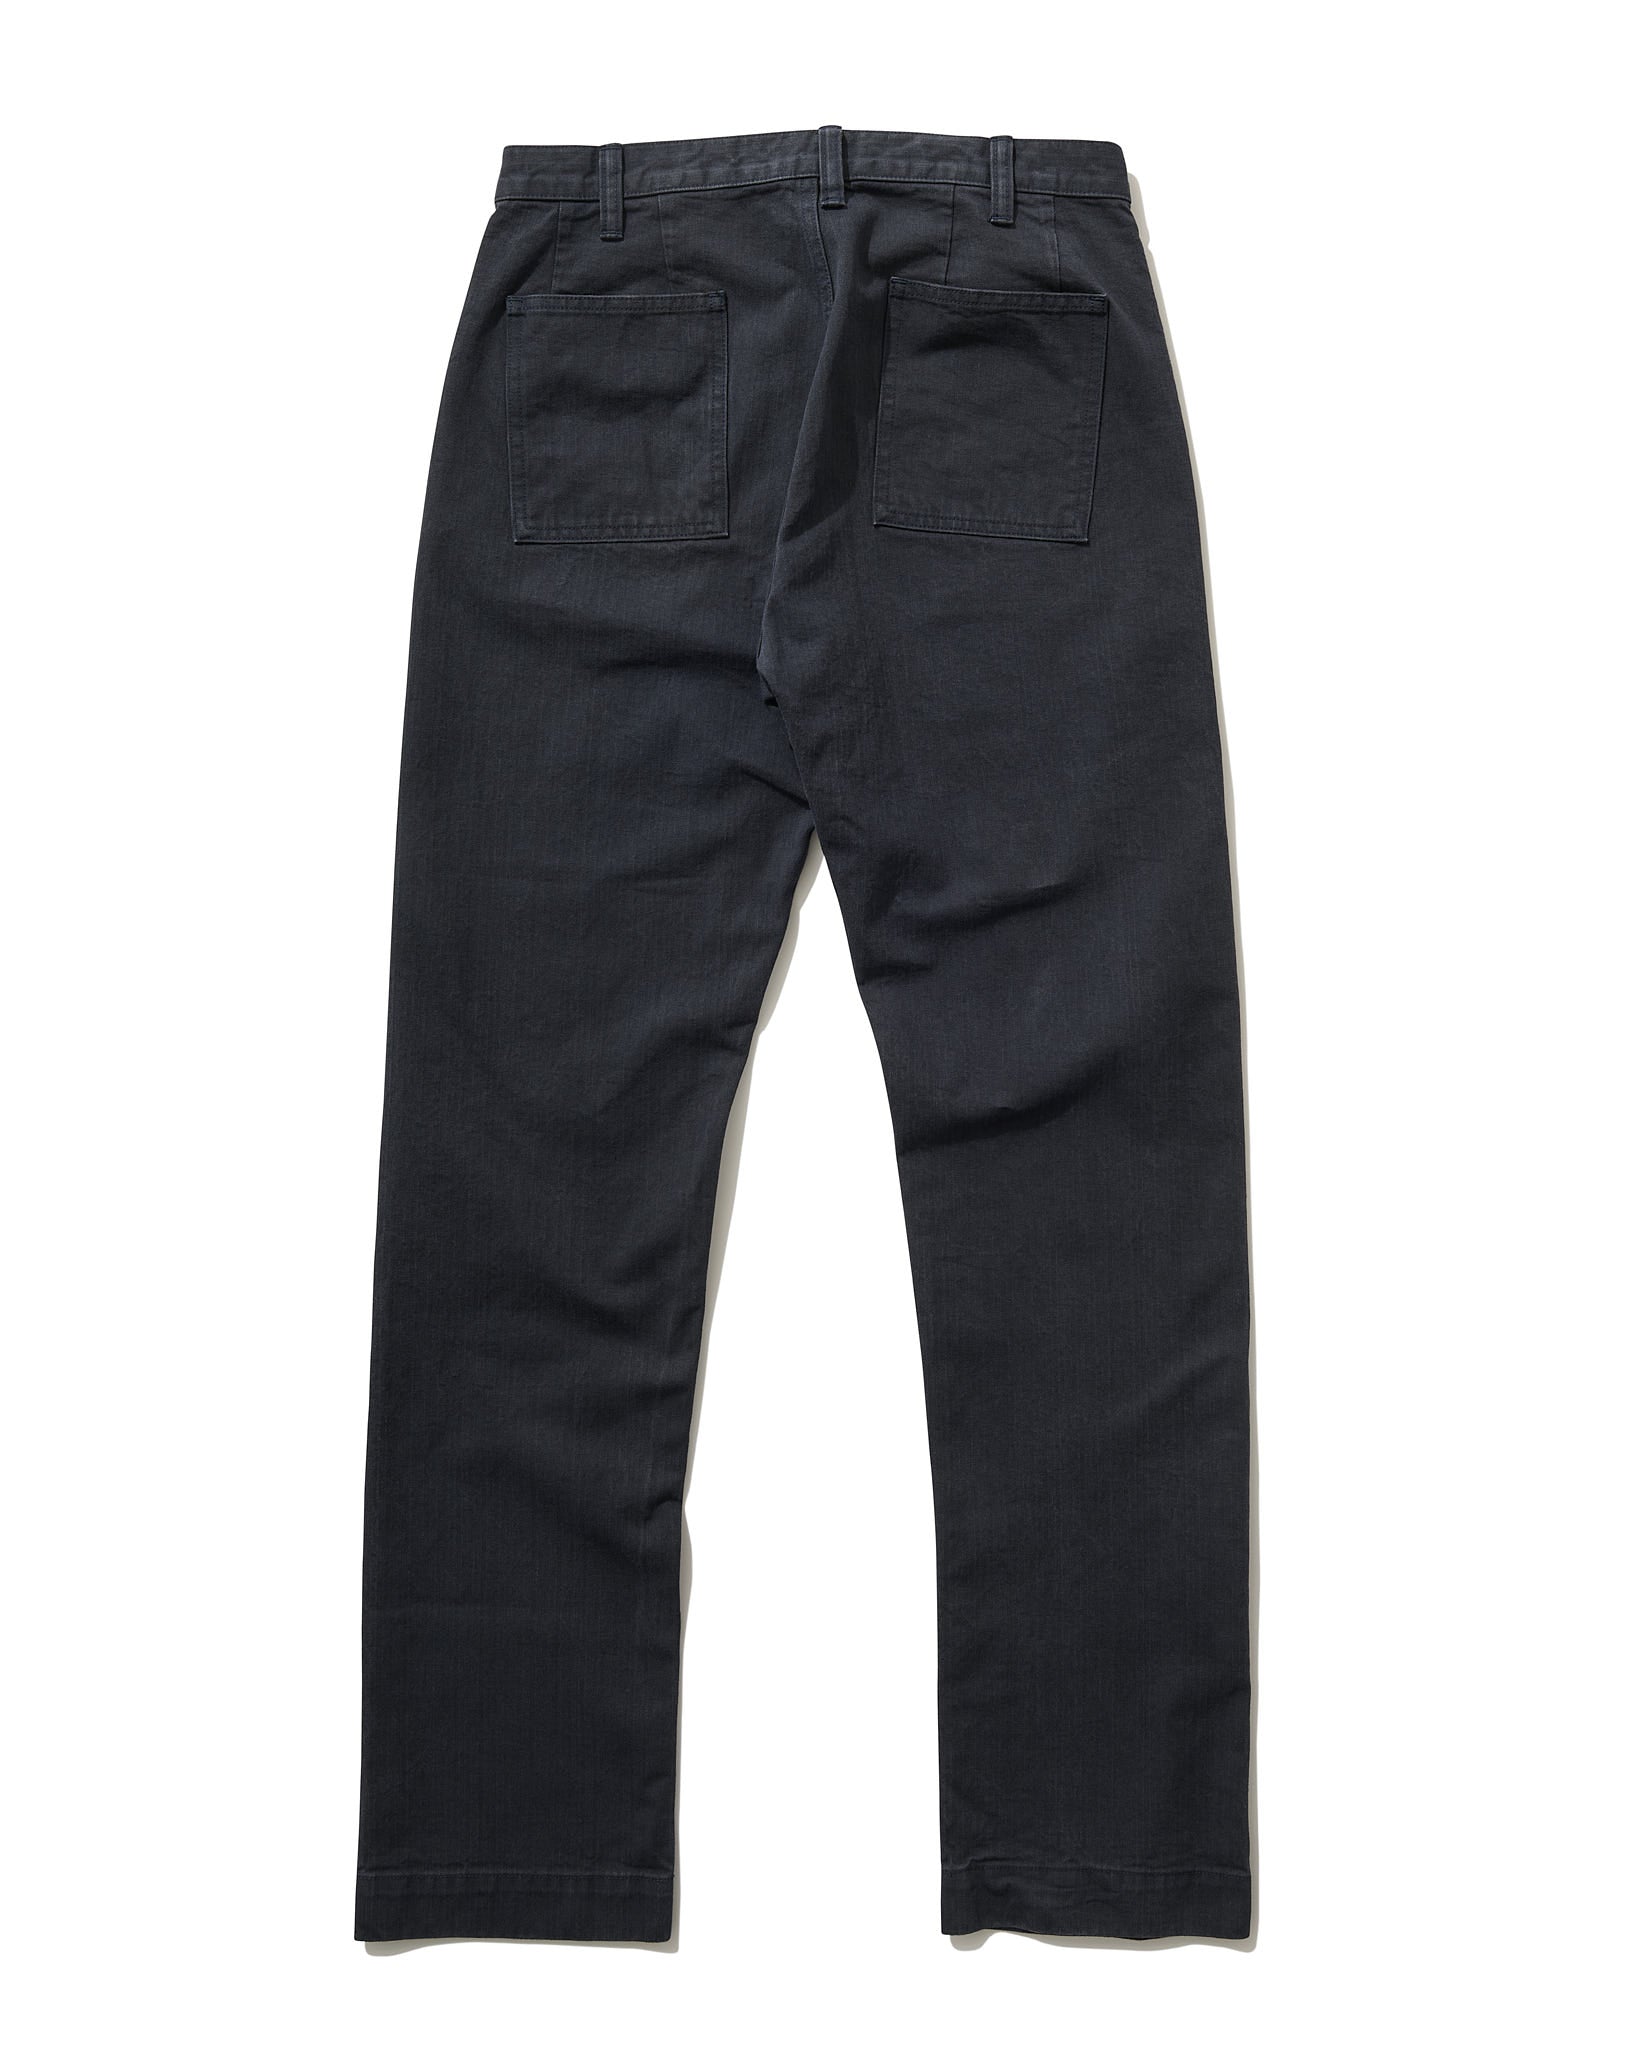 French Pocket Trouser in Navy HBT – Rubato